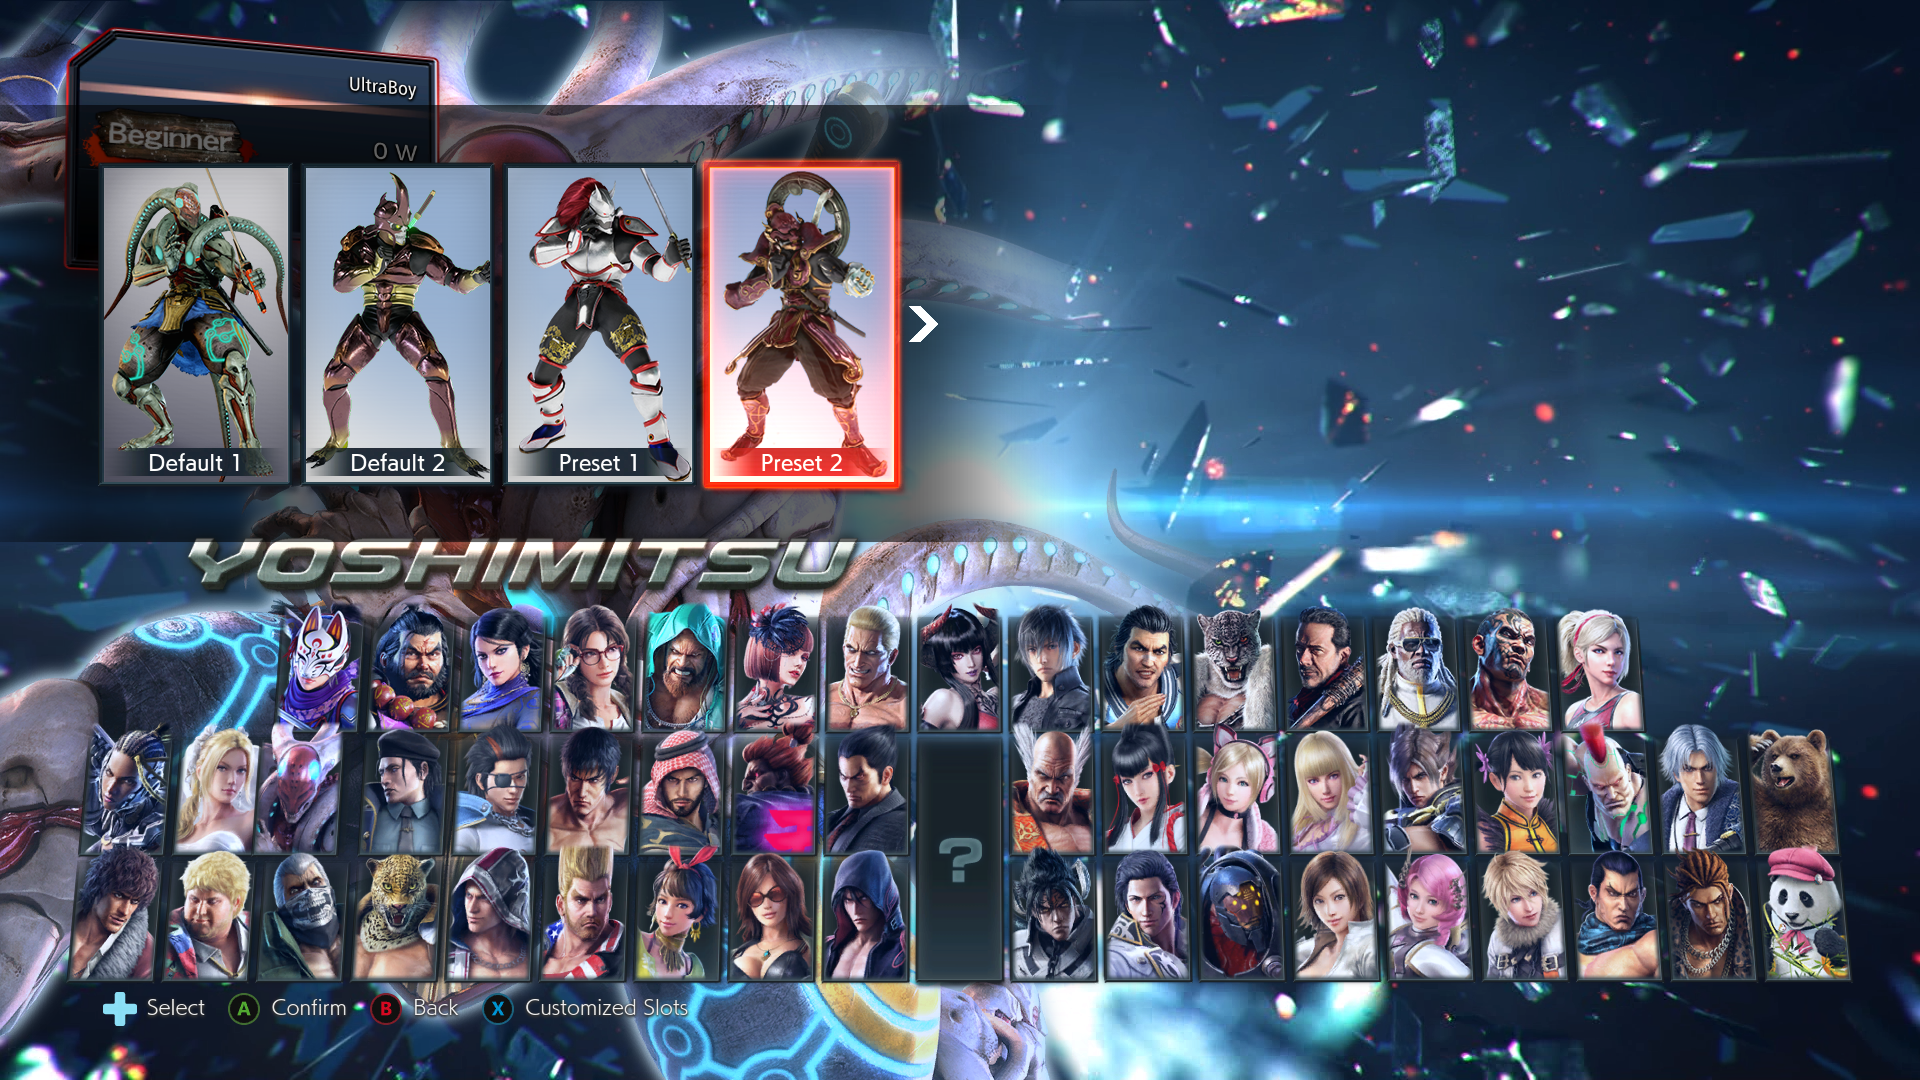 TekkenMods - Tekken 4 Style Character Select X